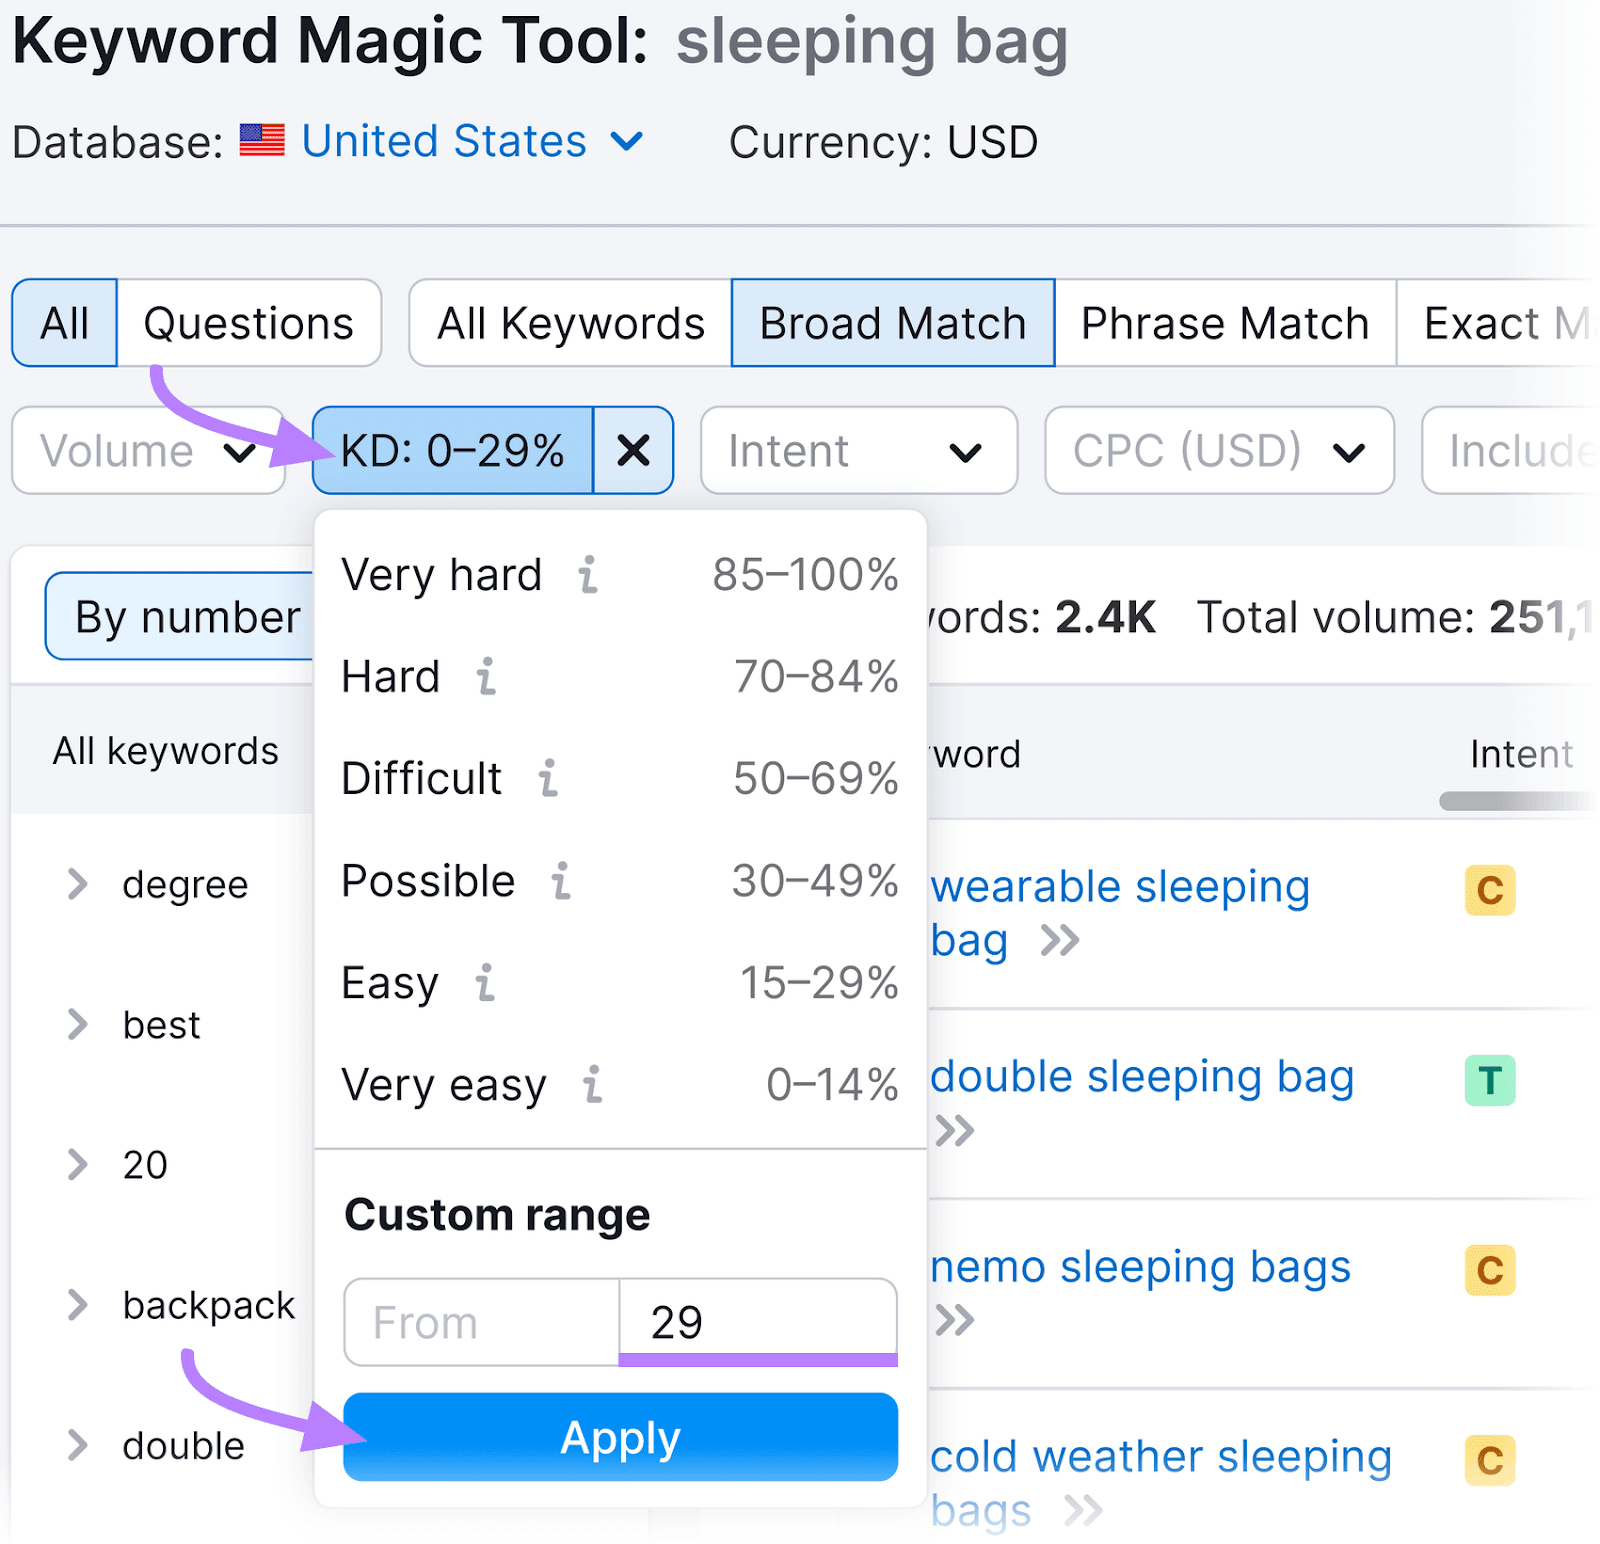 "KD%" filter set to "0-29%" in Keyword Magic Tool